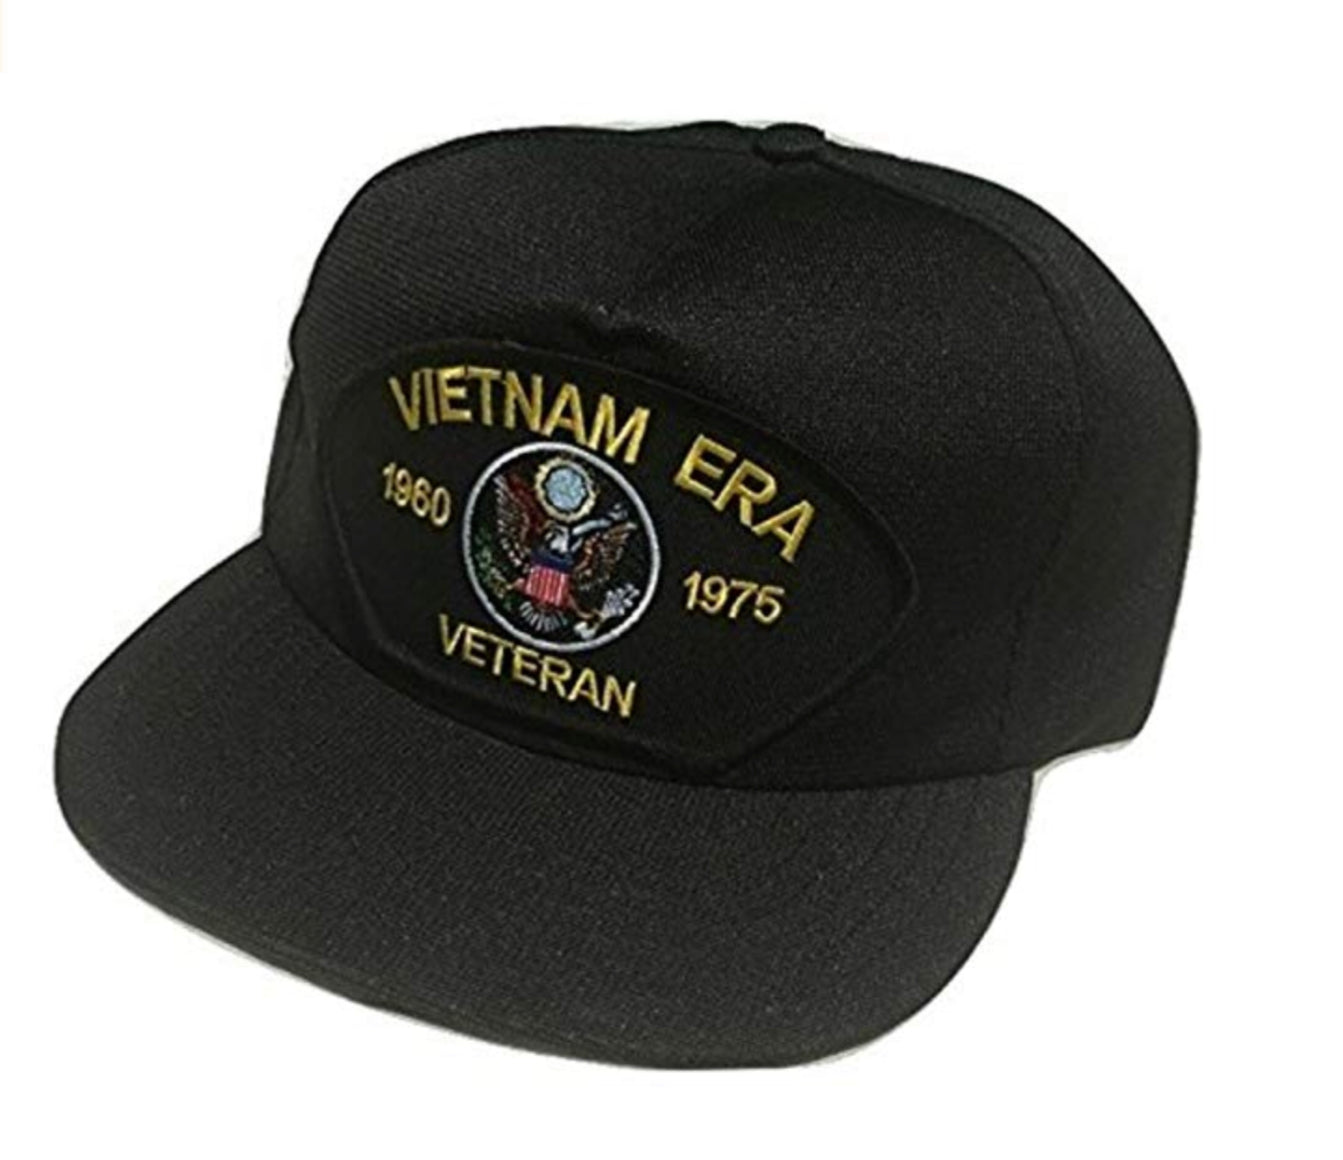 Vietnam Era 1960-1975 Veteran